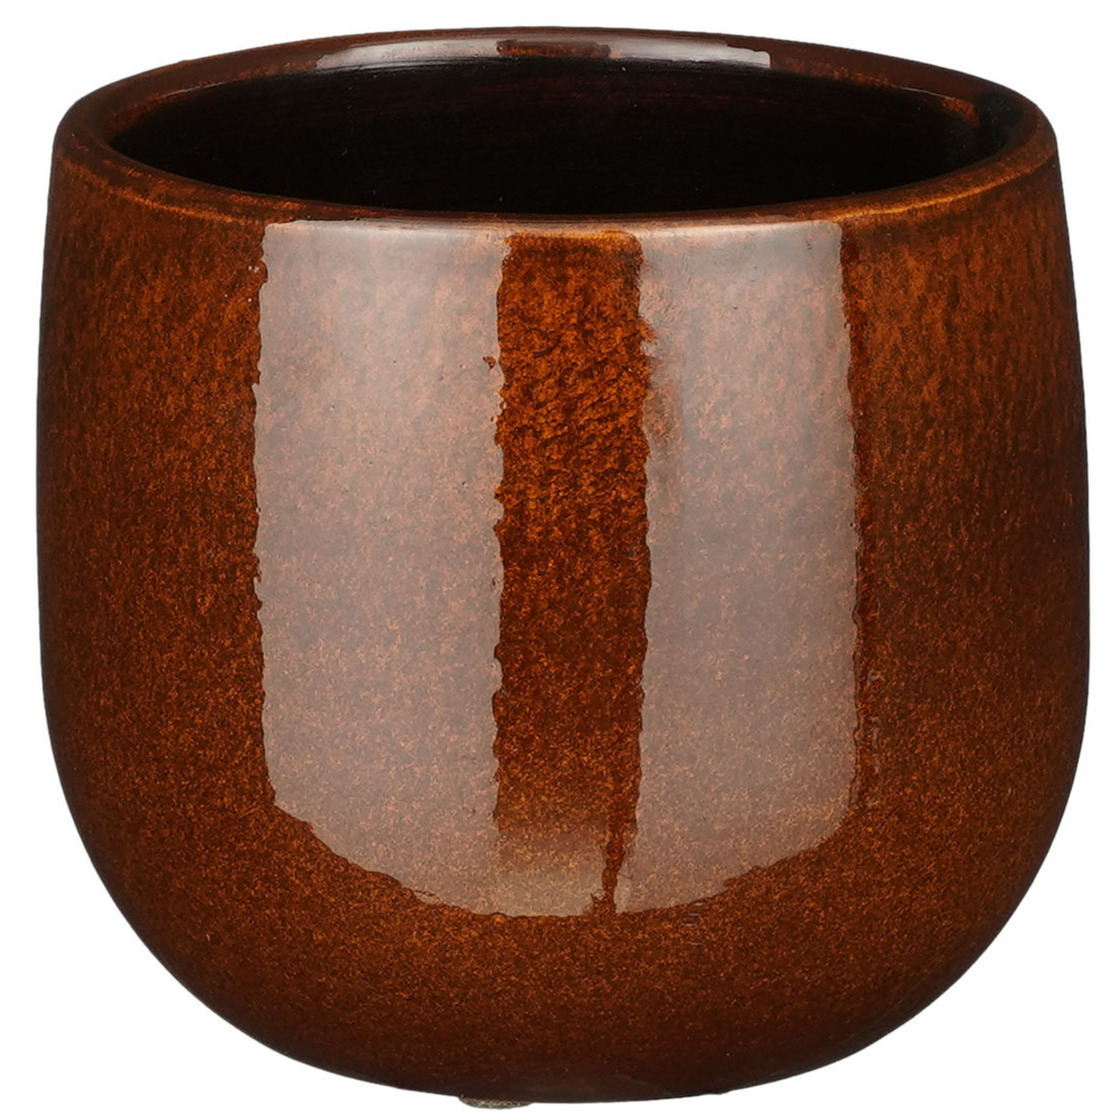 Plantenpot-bloempot keramiek terra bruin speels licht gevlekt patroon D14-H12 cm